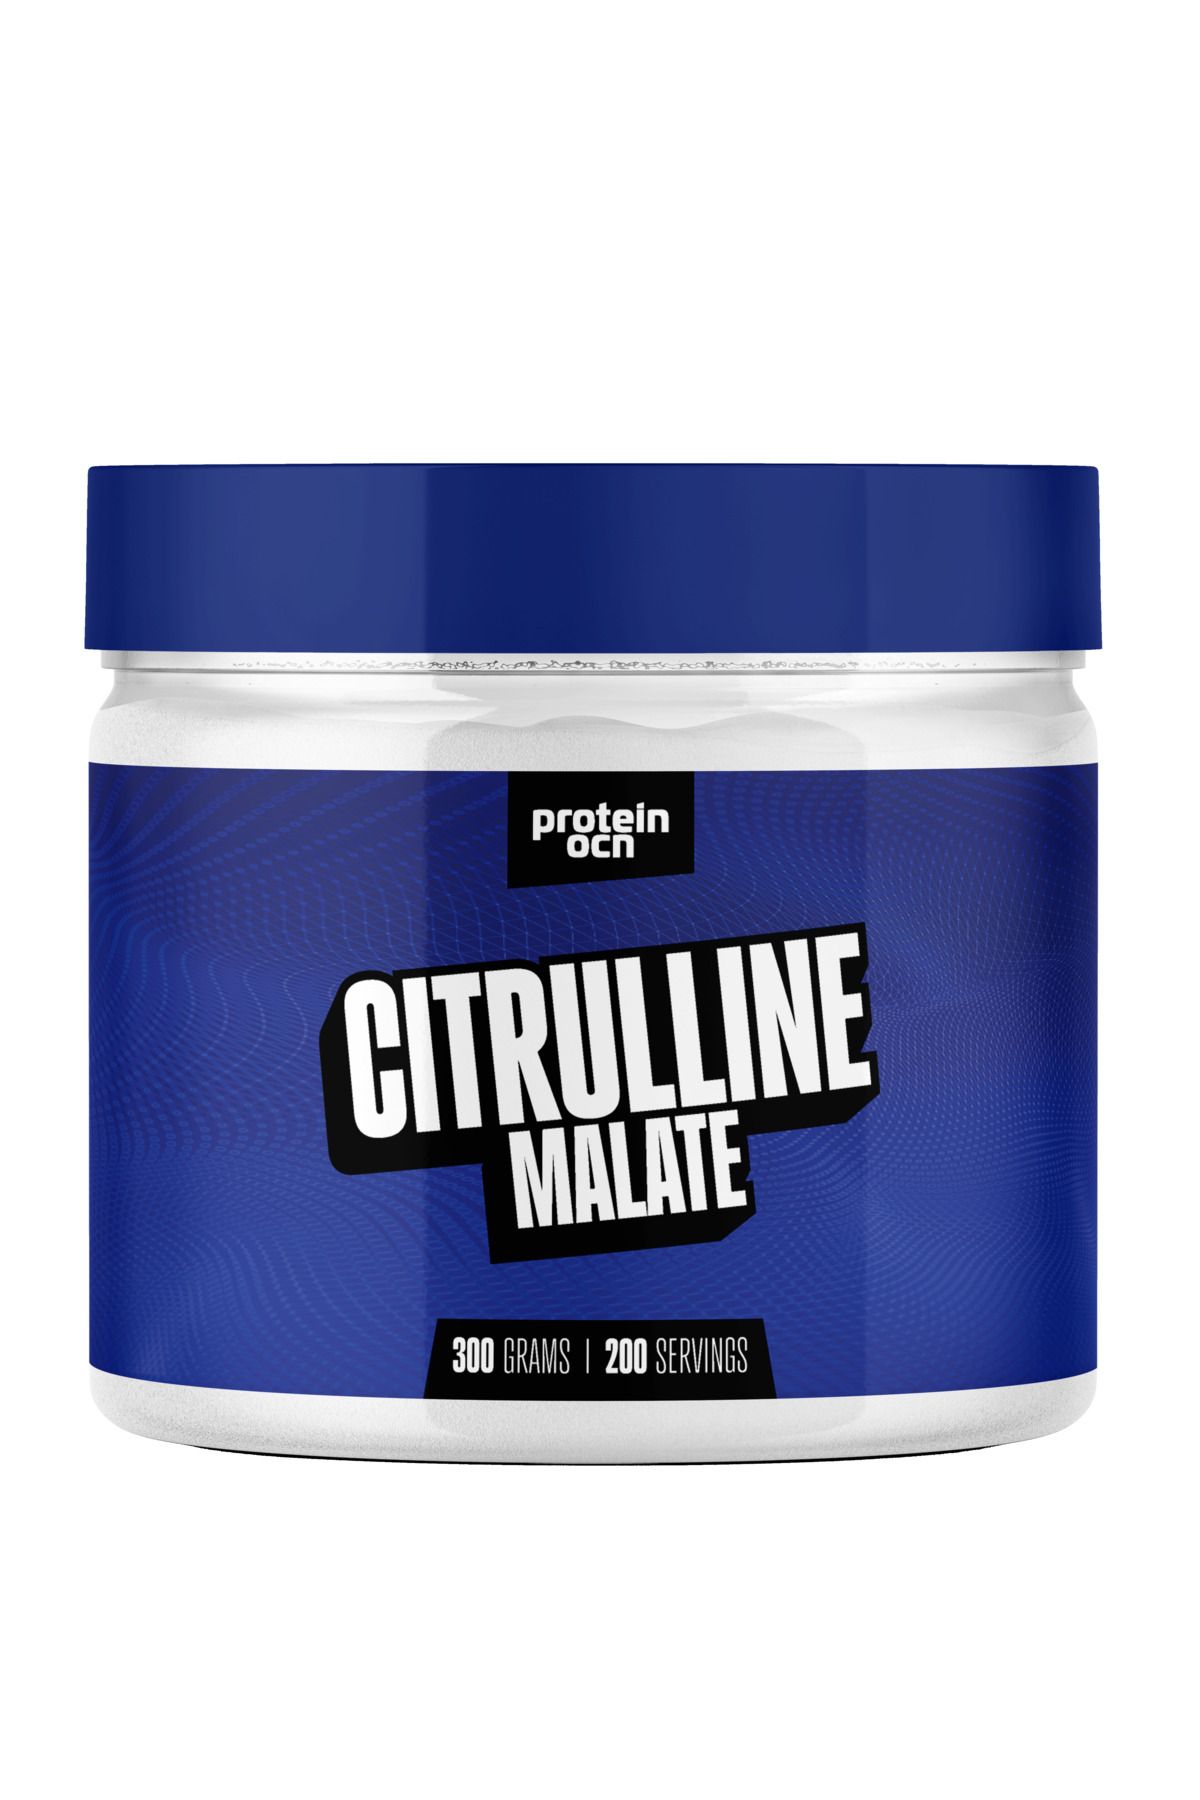 Proteinocean Citrulline Malate - 300 G - 200 Servis